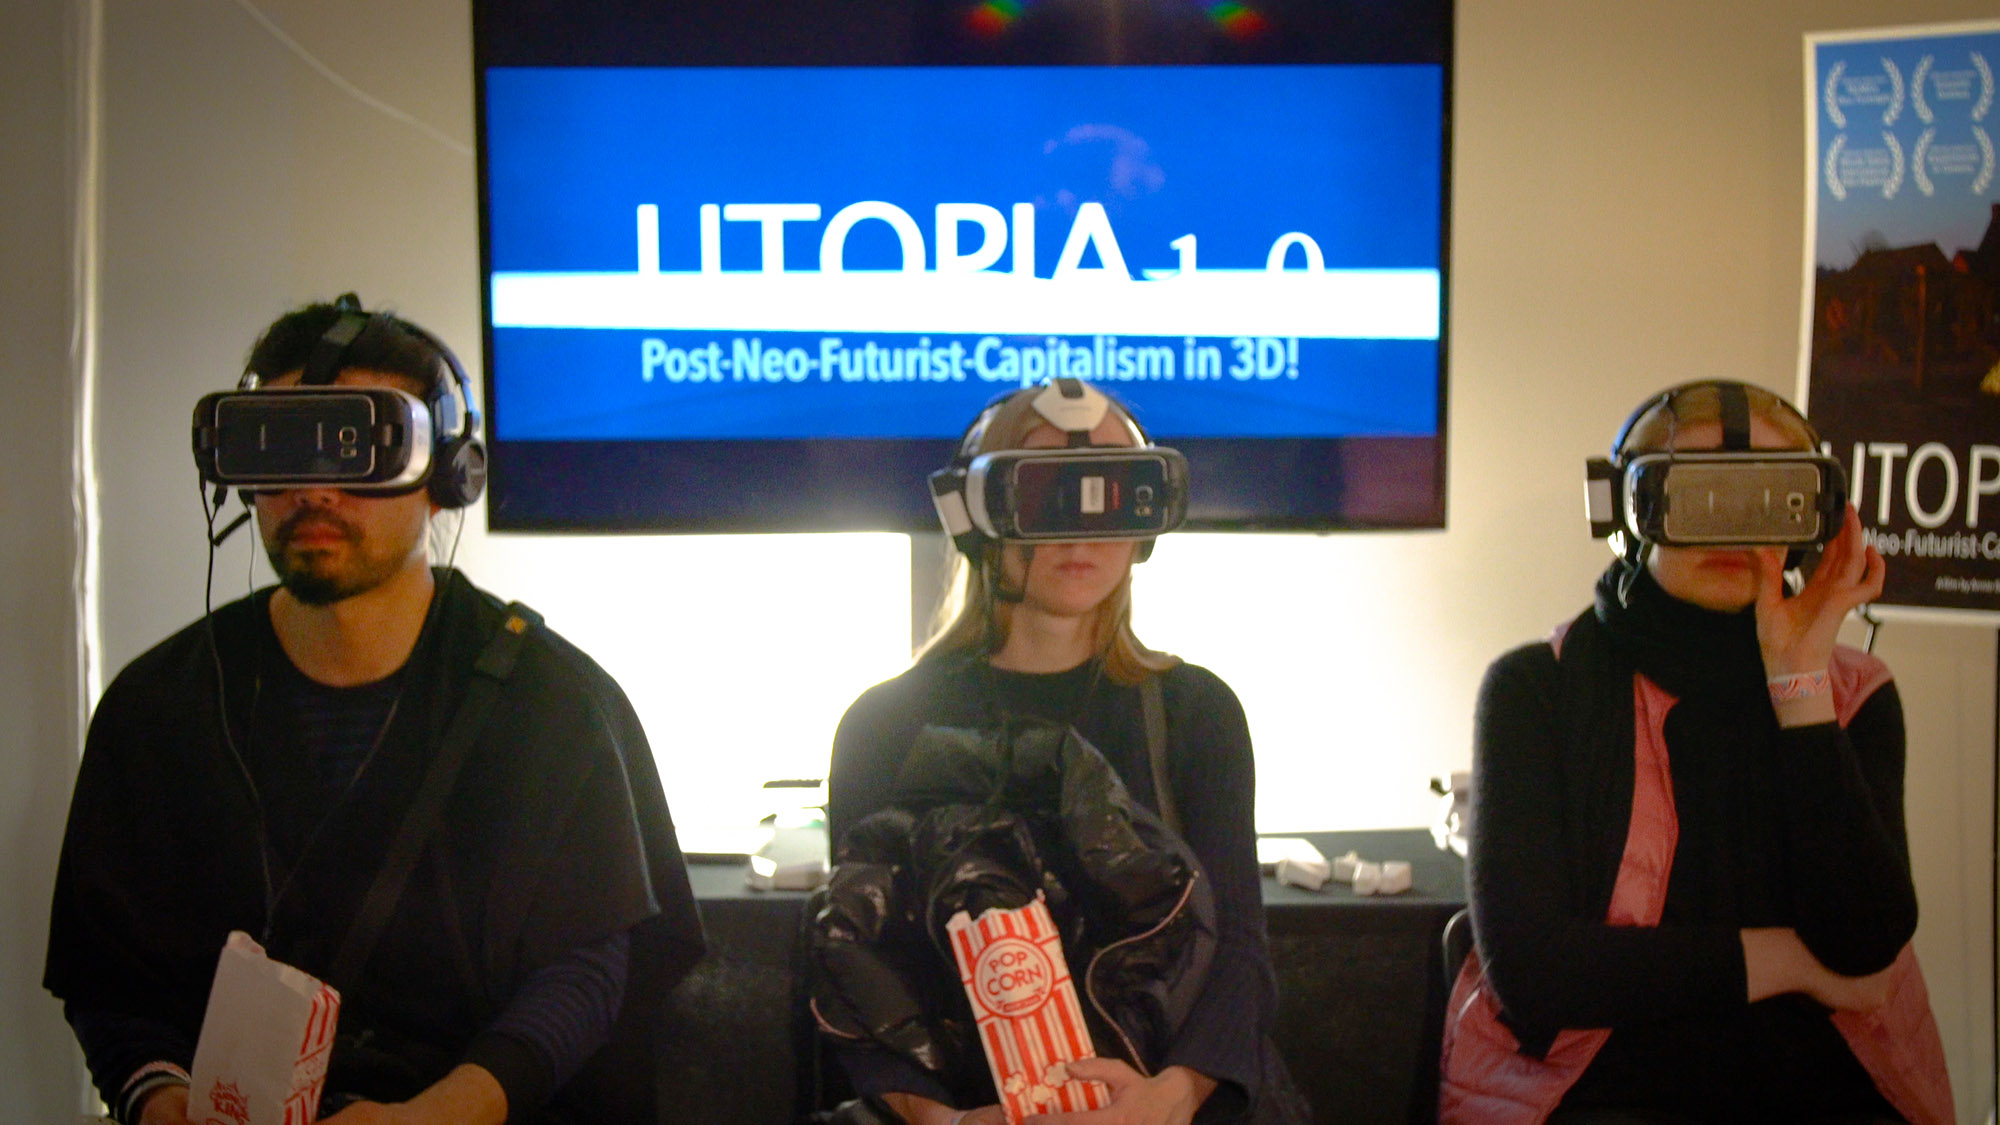 Three particpants wear VR headgear alongside the UTOPIA on screen behind them